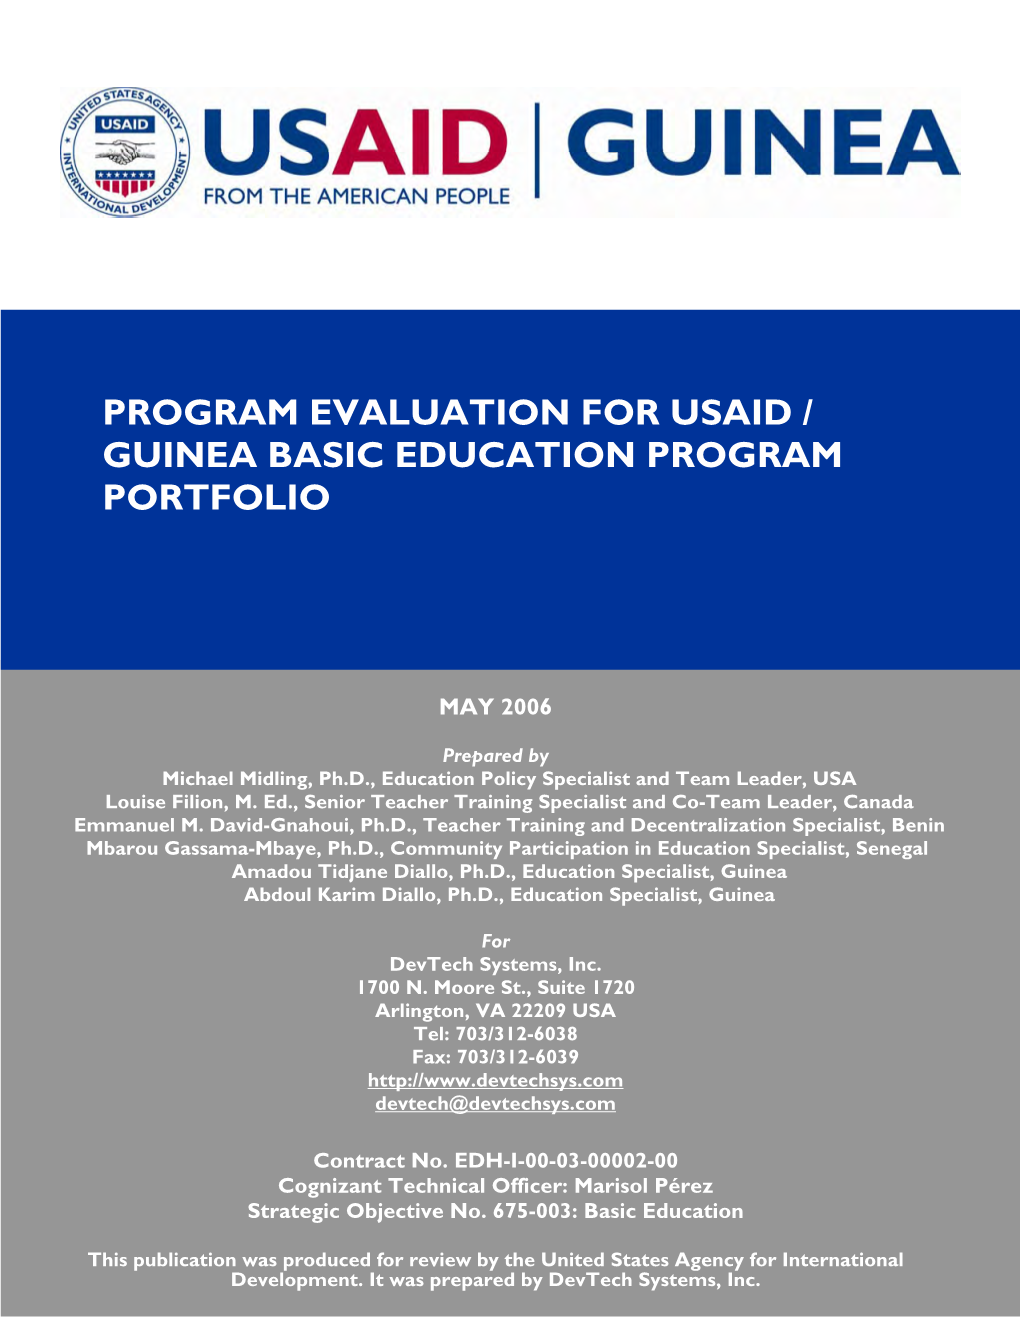 Program Evaluation for USAID/Guinea Basic